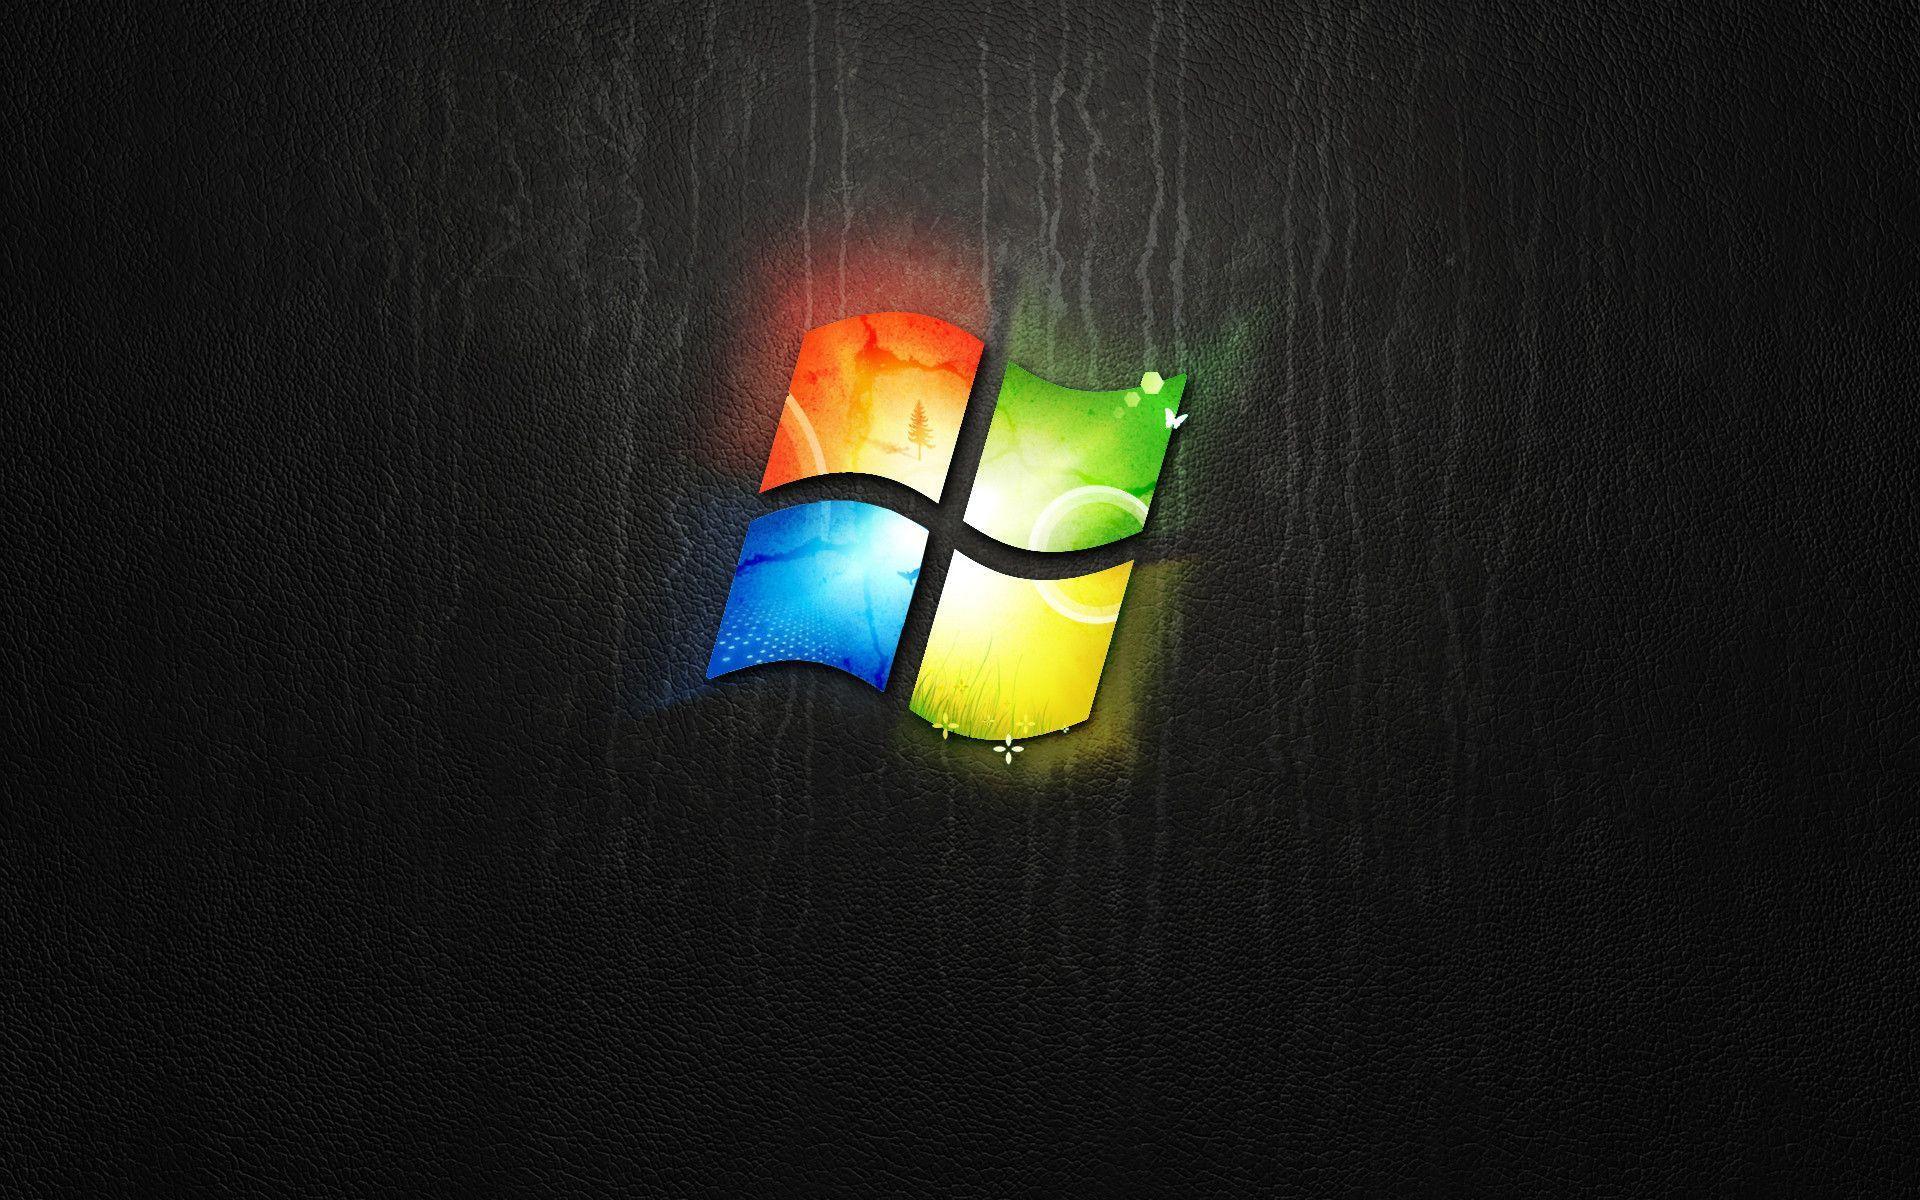 Cool Windows Desktop Backgrounds - Wallpaper Cave